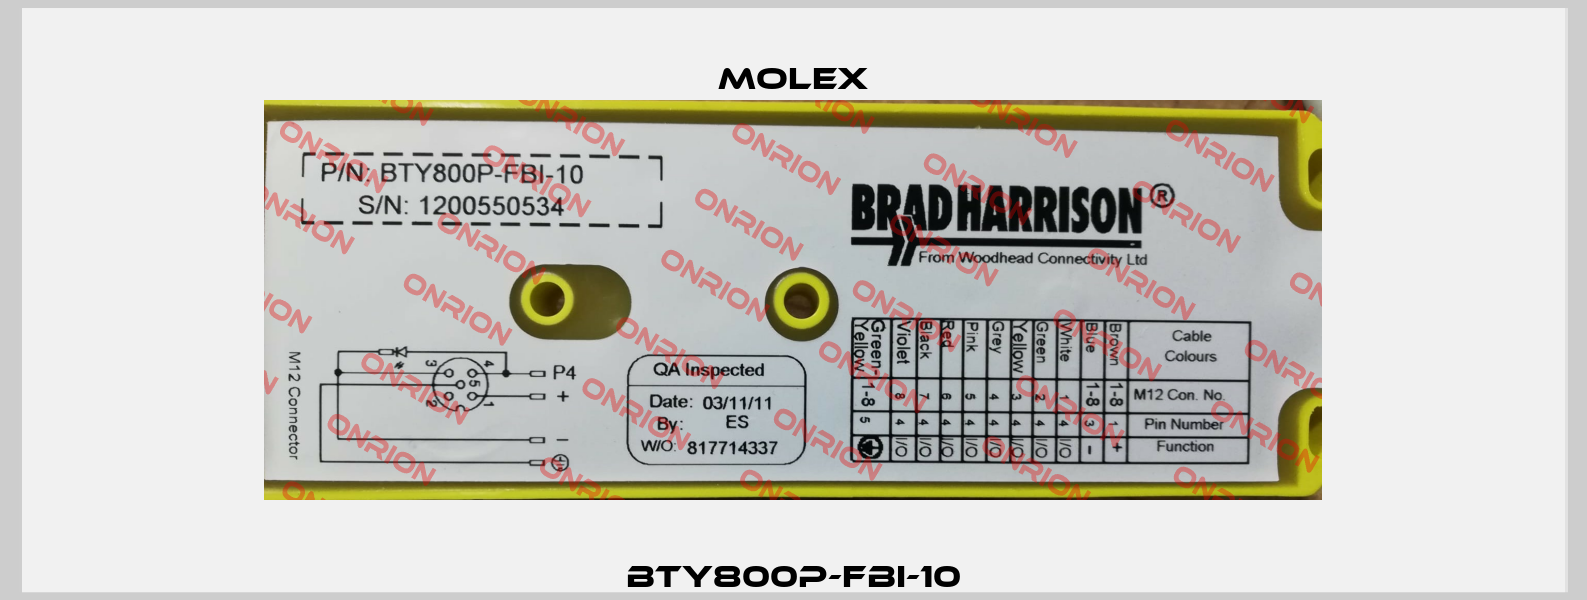 BTY800P-FBI-10 Molex